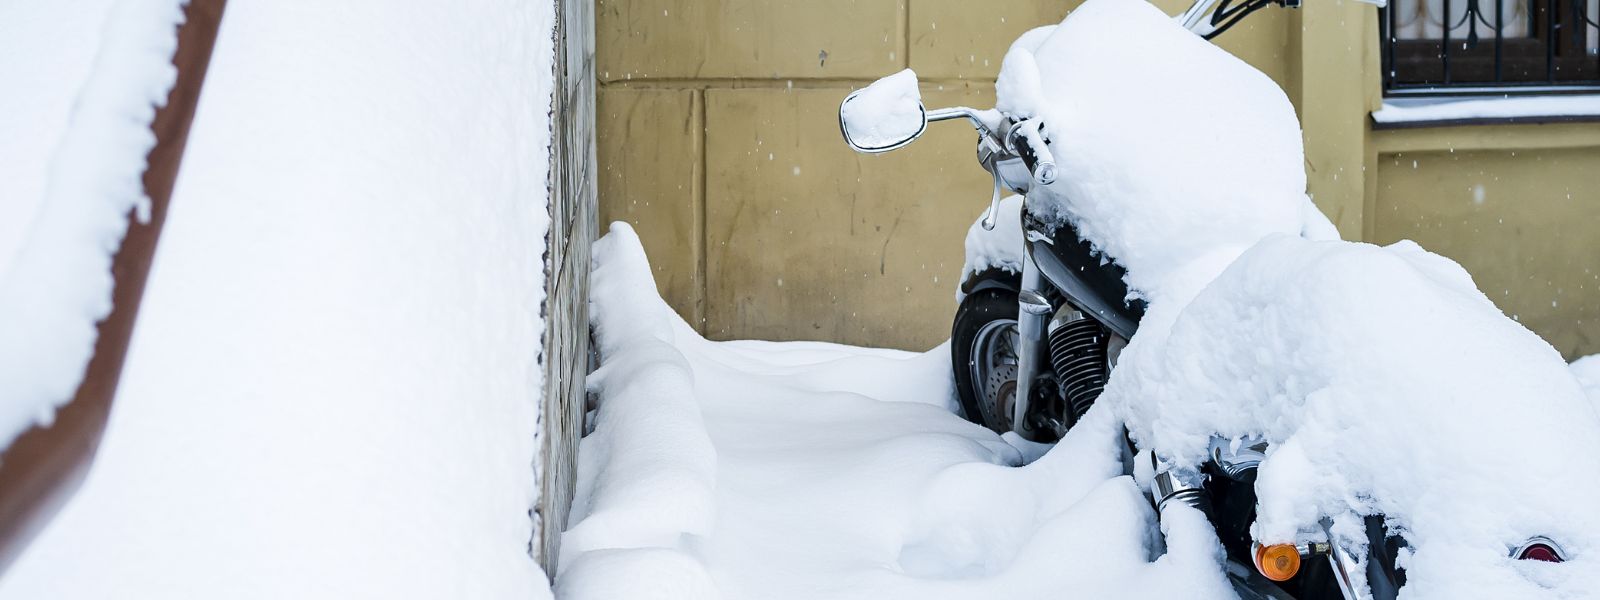 Stocker moto hiver